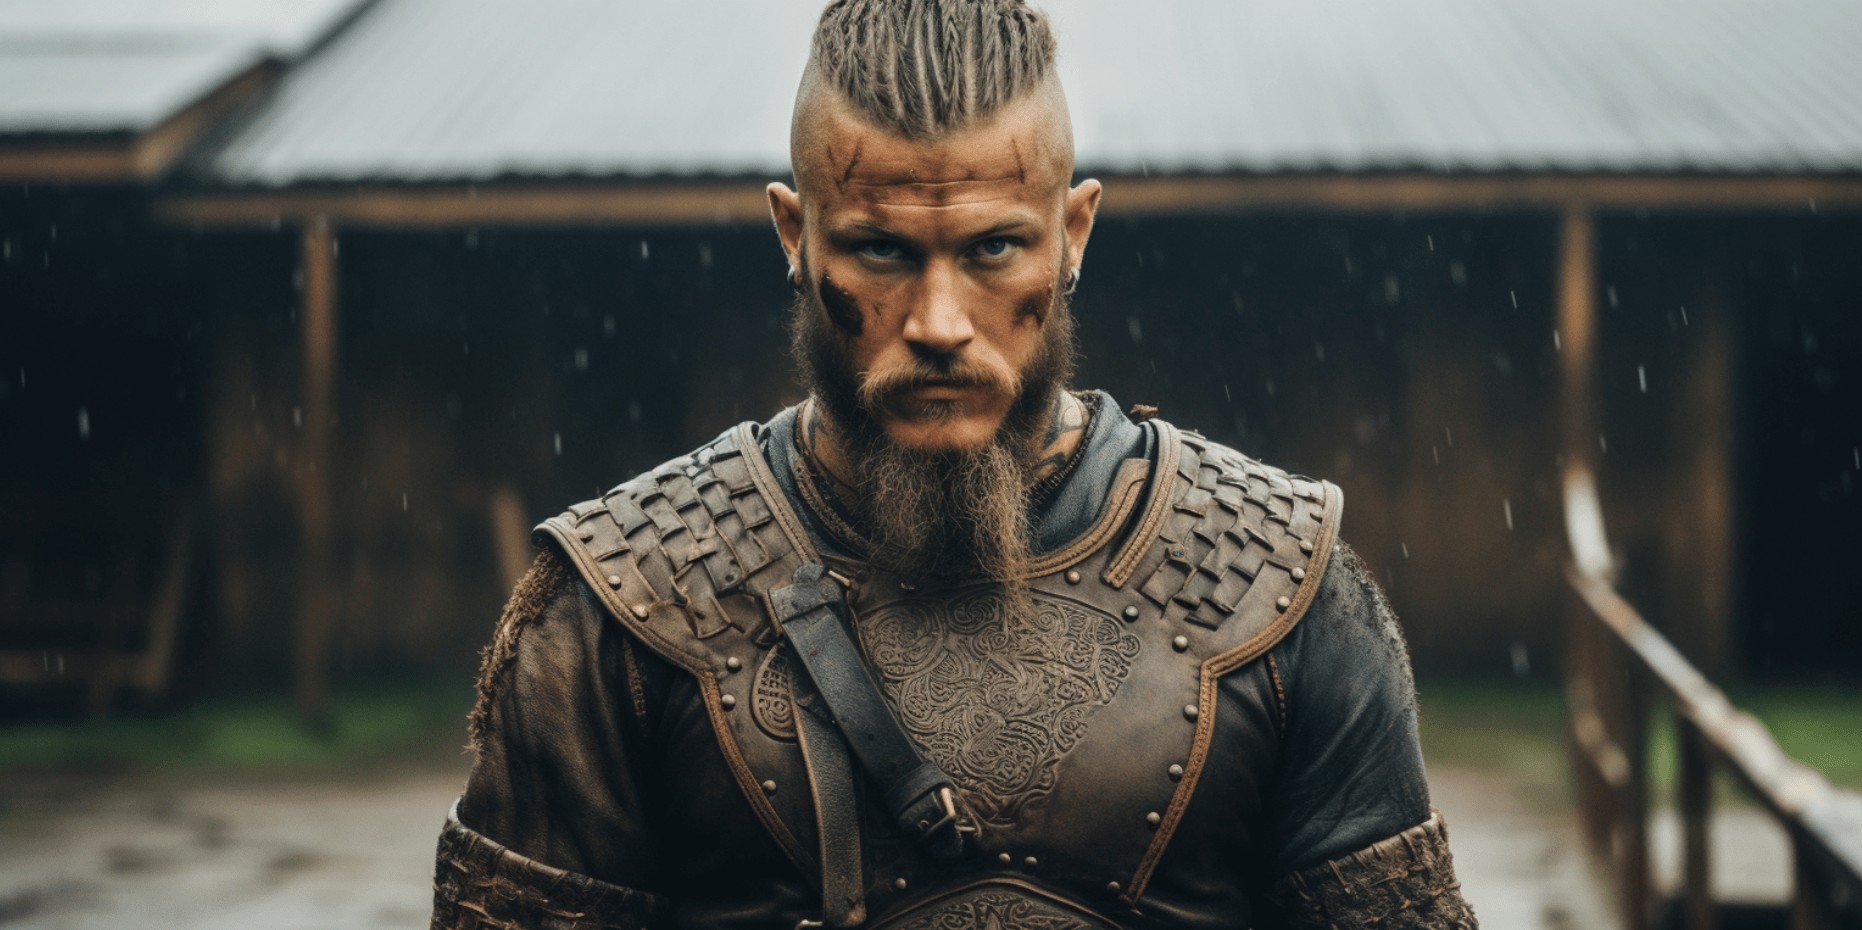 The Saga of Ragnar Lothbrok (2016)